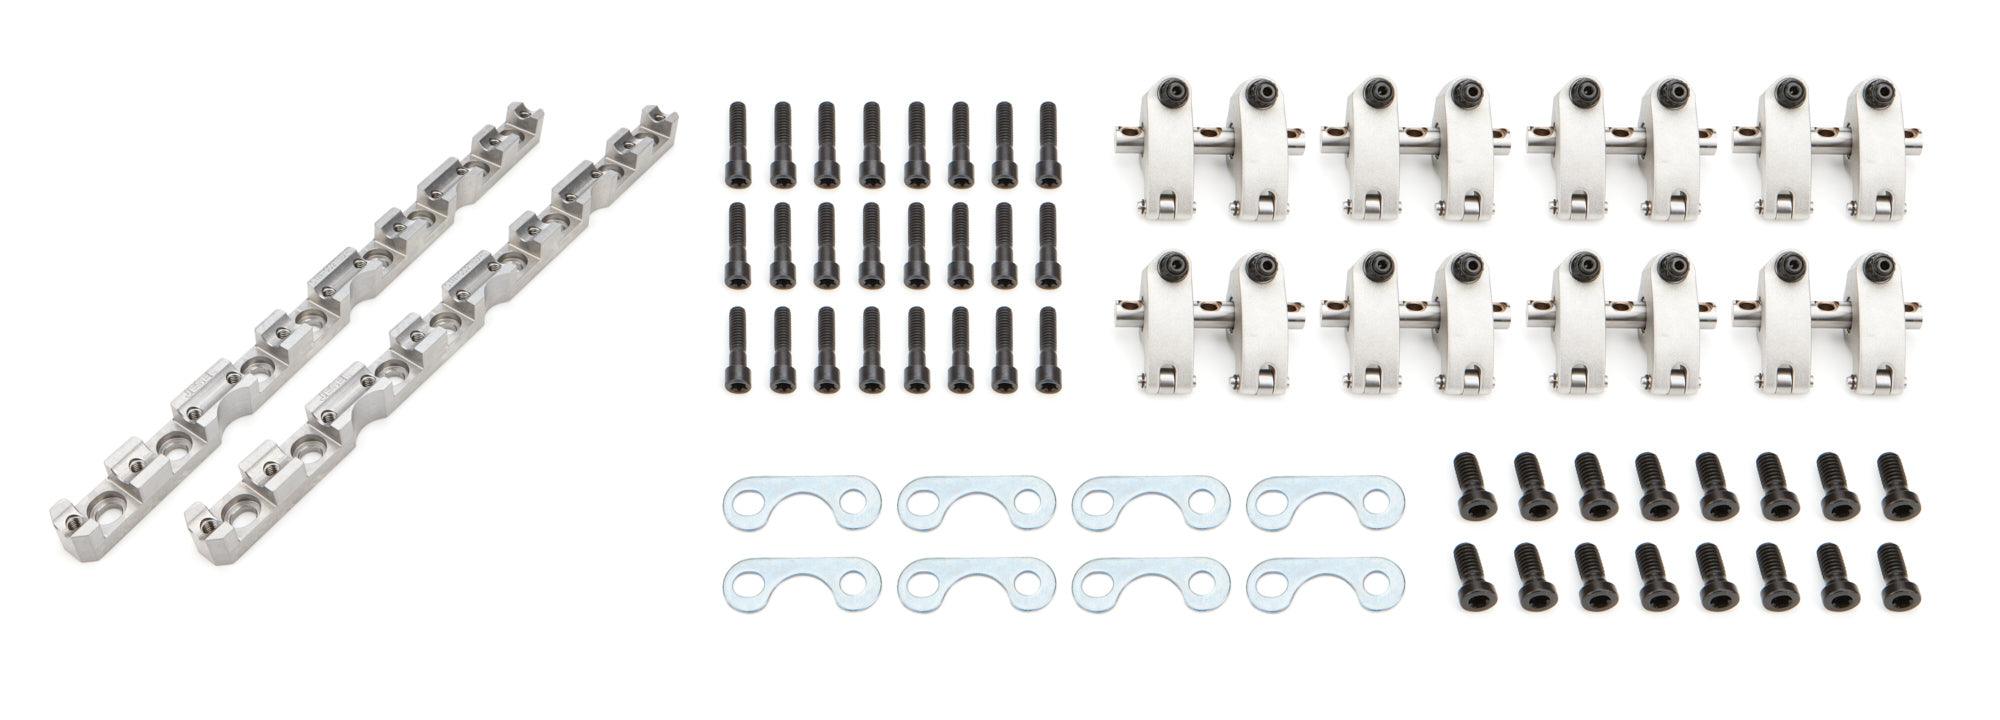 Shaft Rocker Arm Kit SBF 1.6/1.6 Ratio - Burlile Performance Products